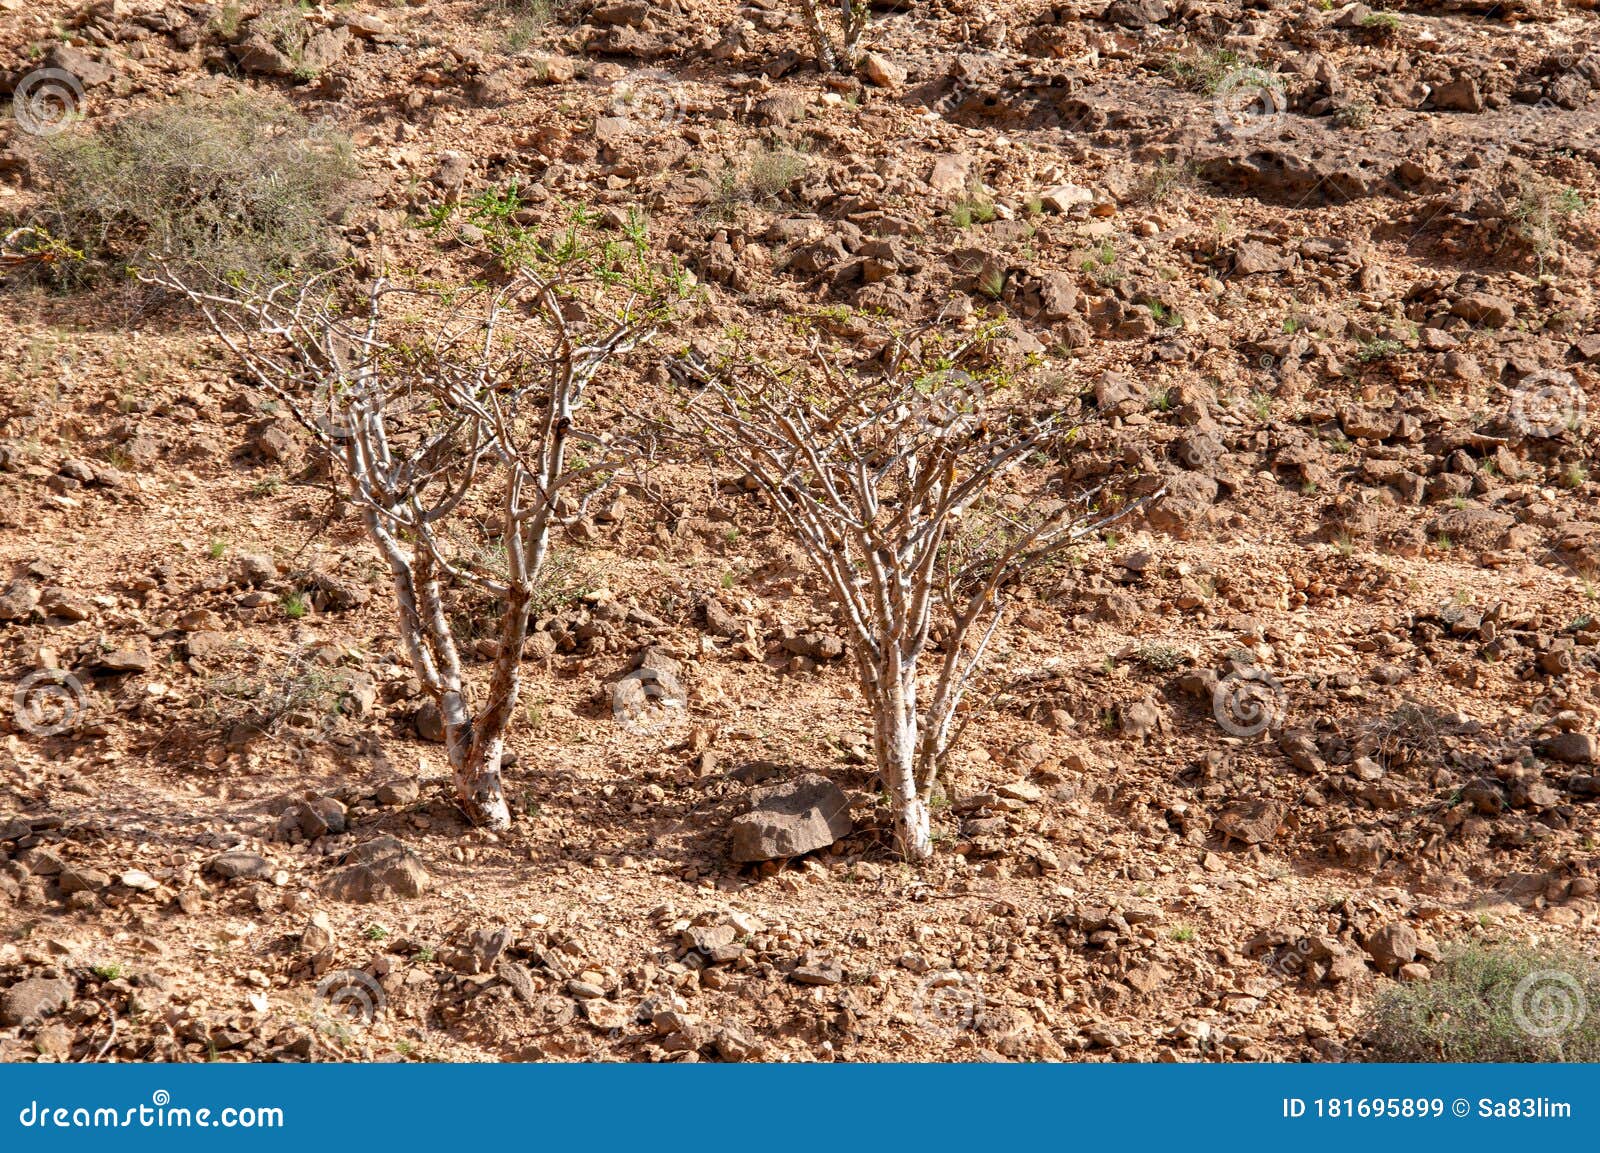 The Frankincense Trees of Wadi Dawkah, Oman Stock Image - Image of rori